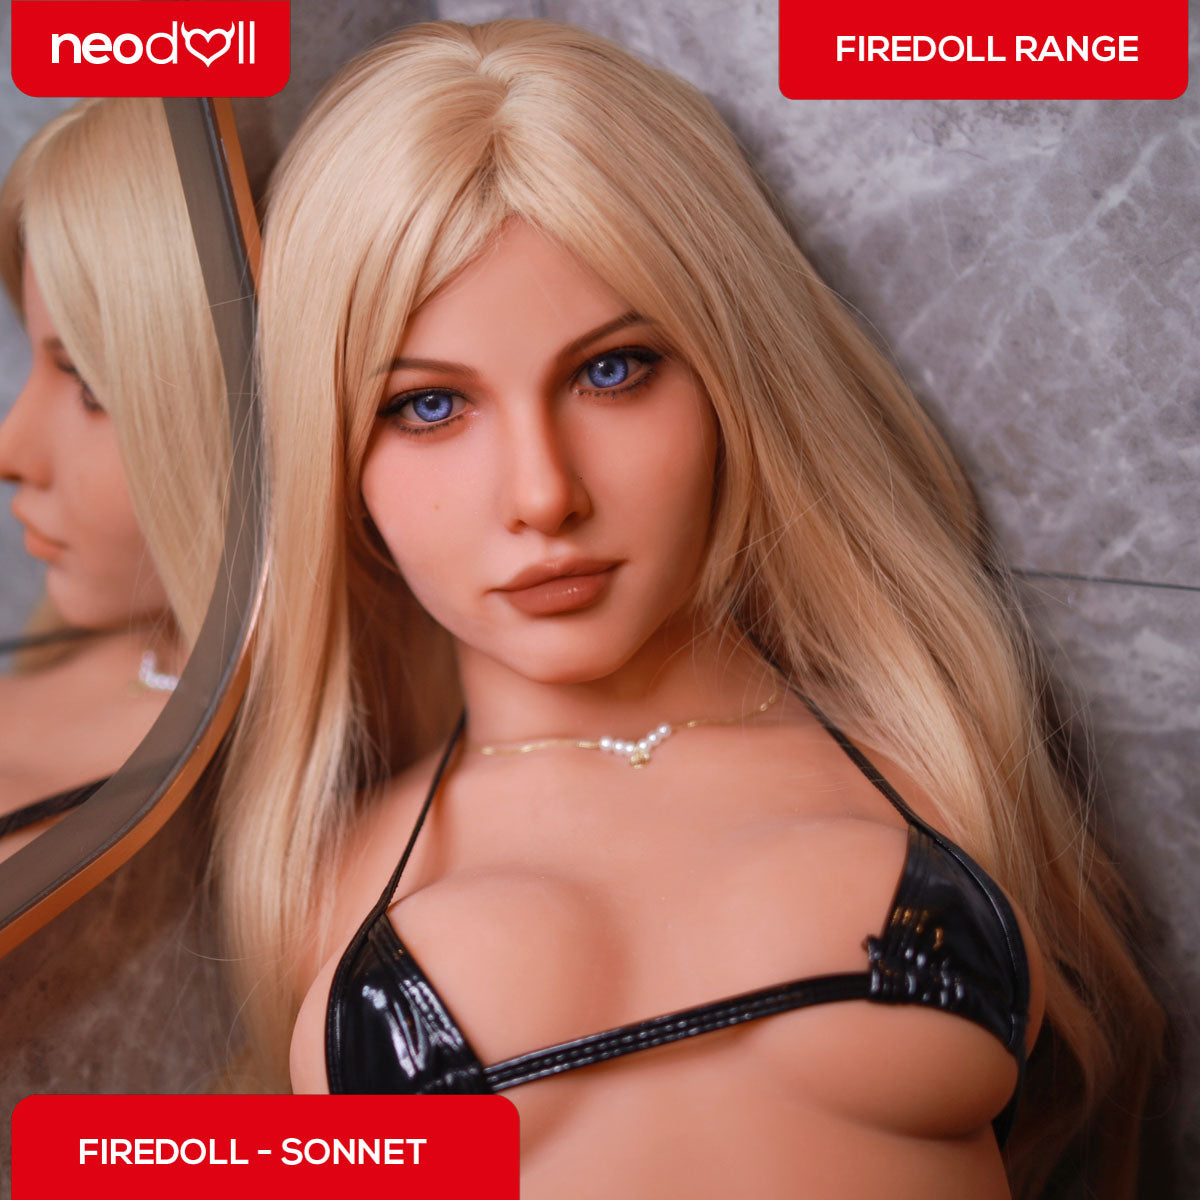 Firedoll Torso - Sonnet- Realistic Sex Doll Torso - Light tan